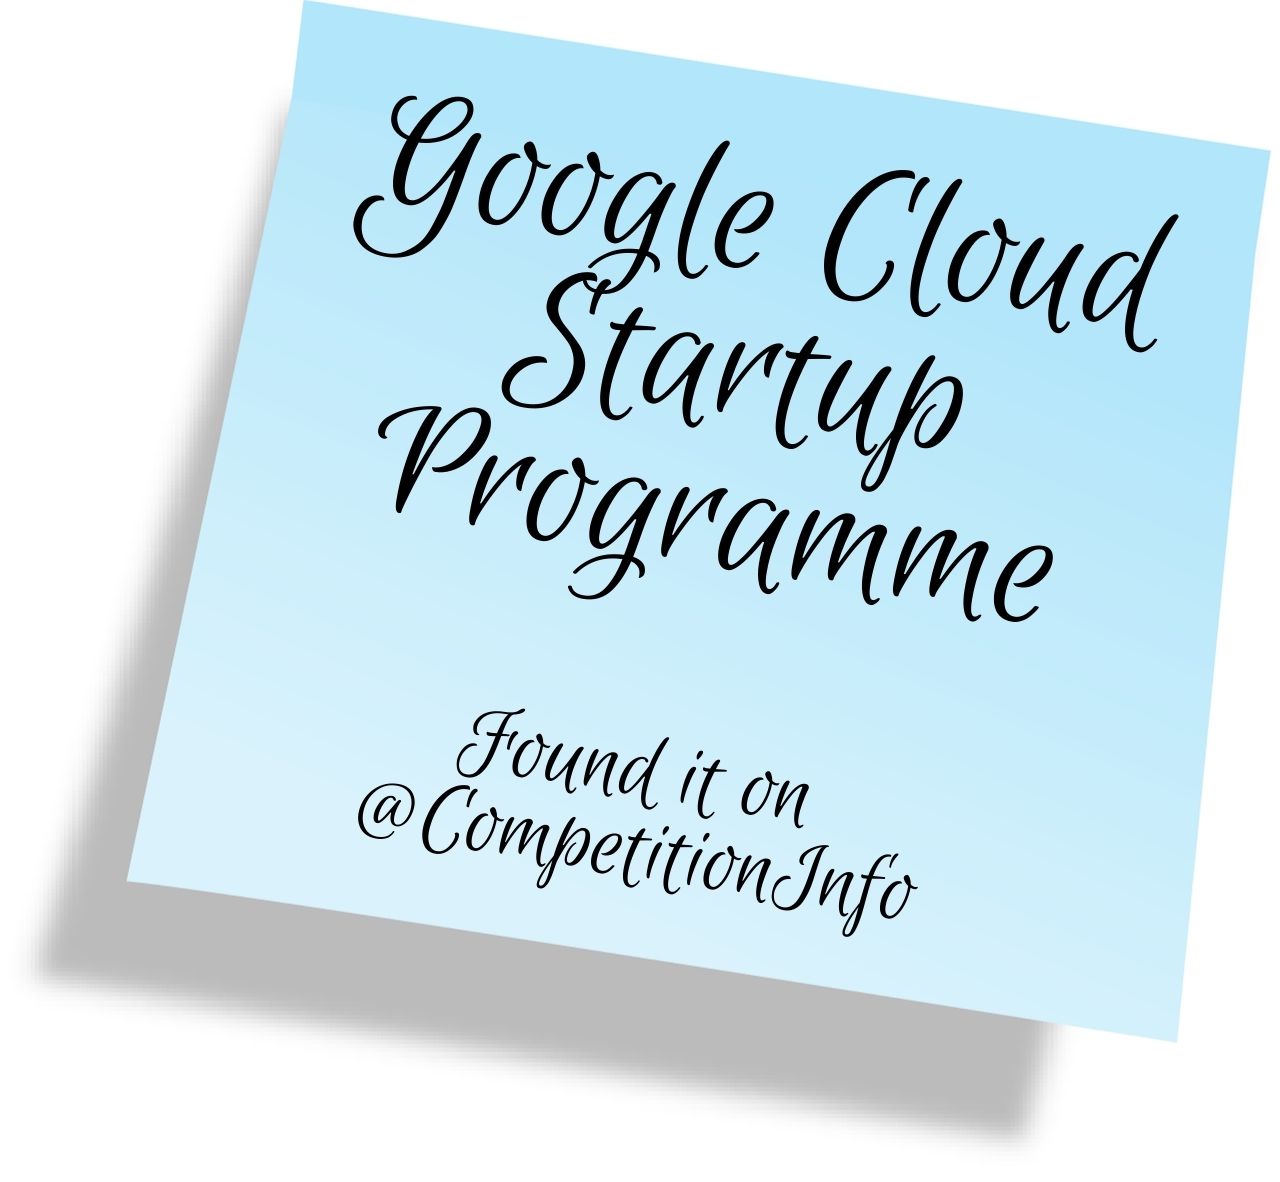 Google Cloud Startup Programme